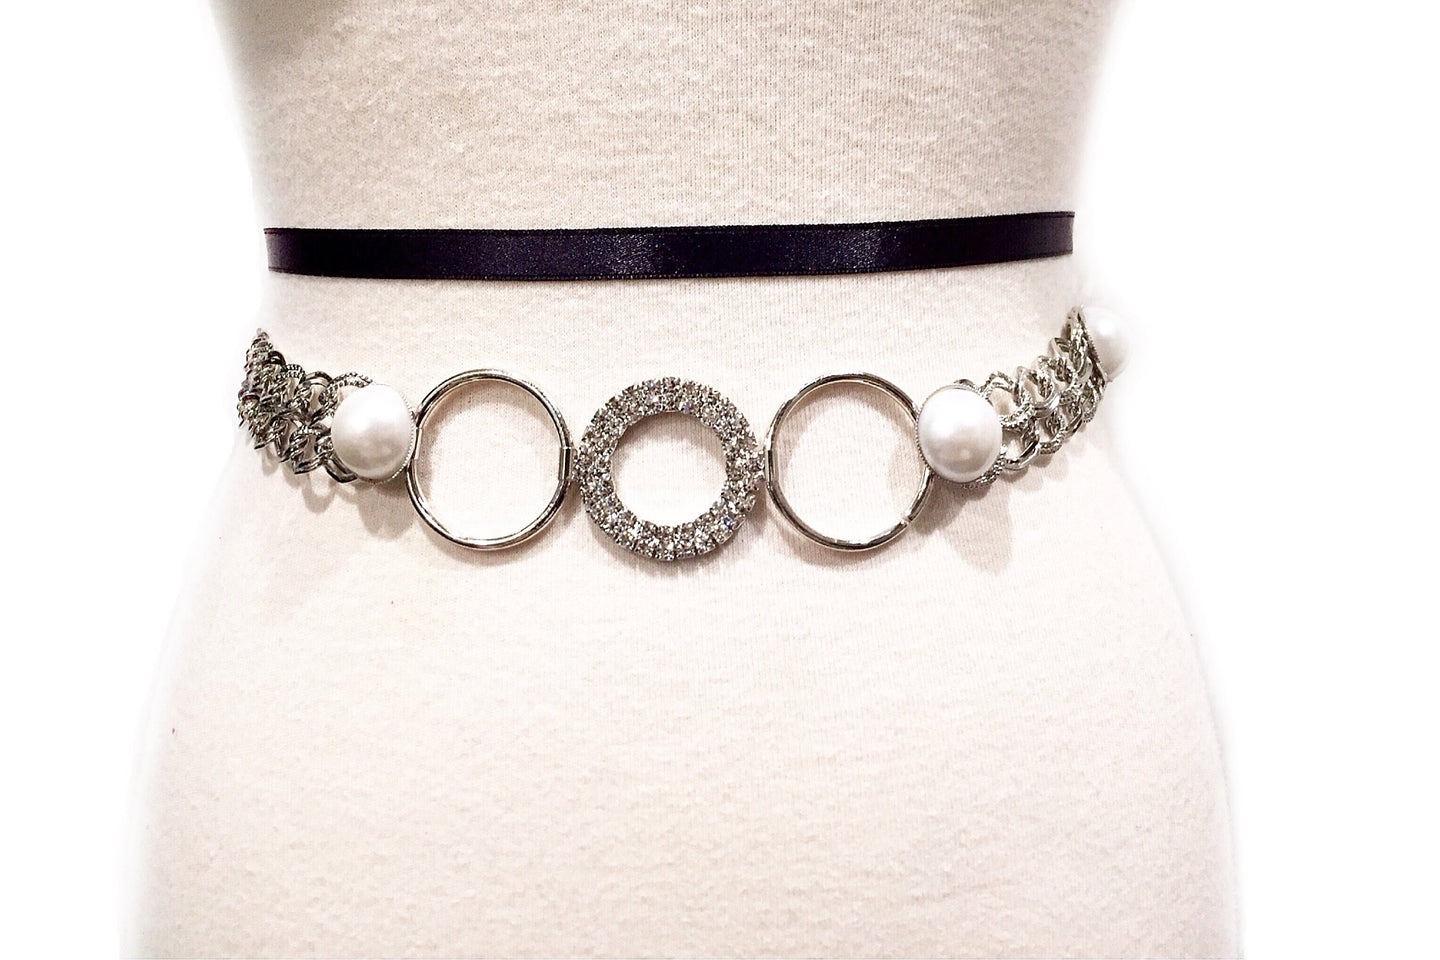 Metallic Chain Belt with Pearls & Rhinestones)